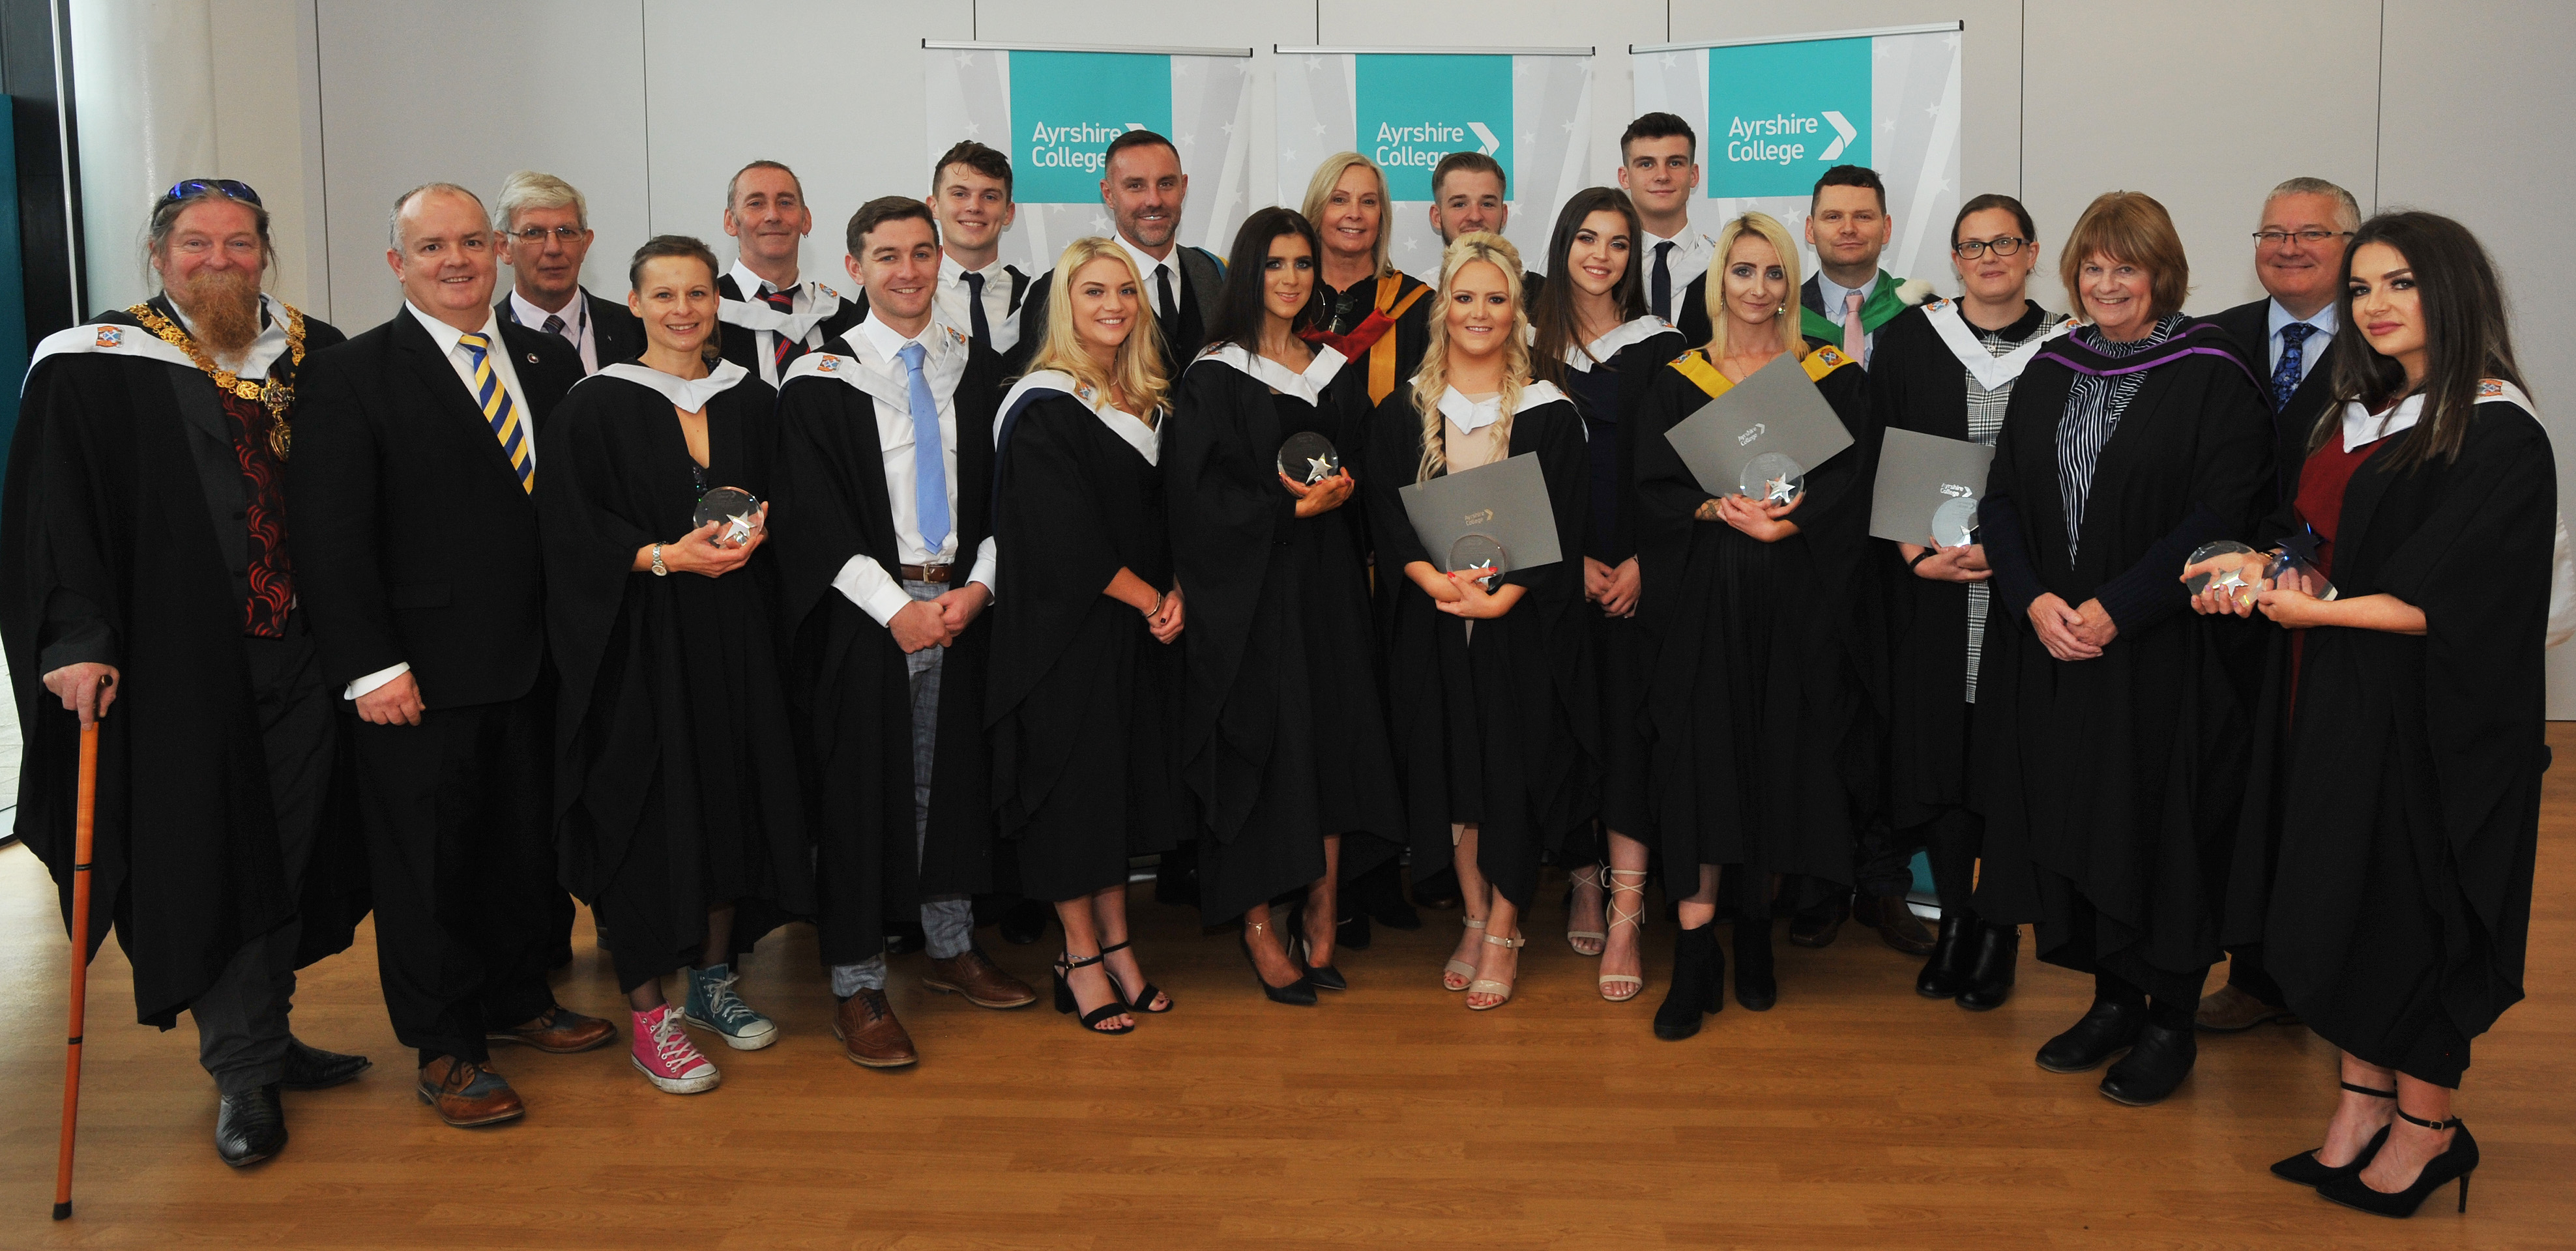 Kilmarnock graduation for college students